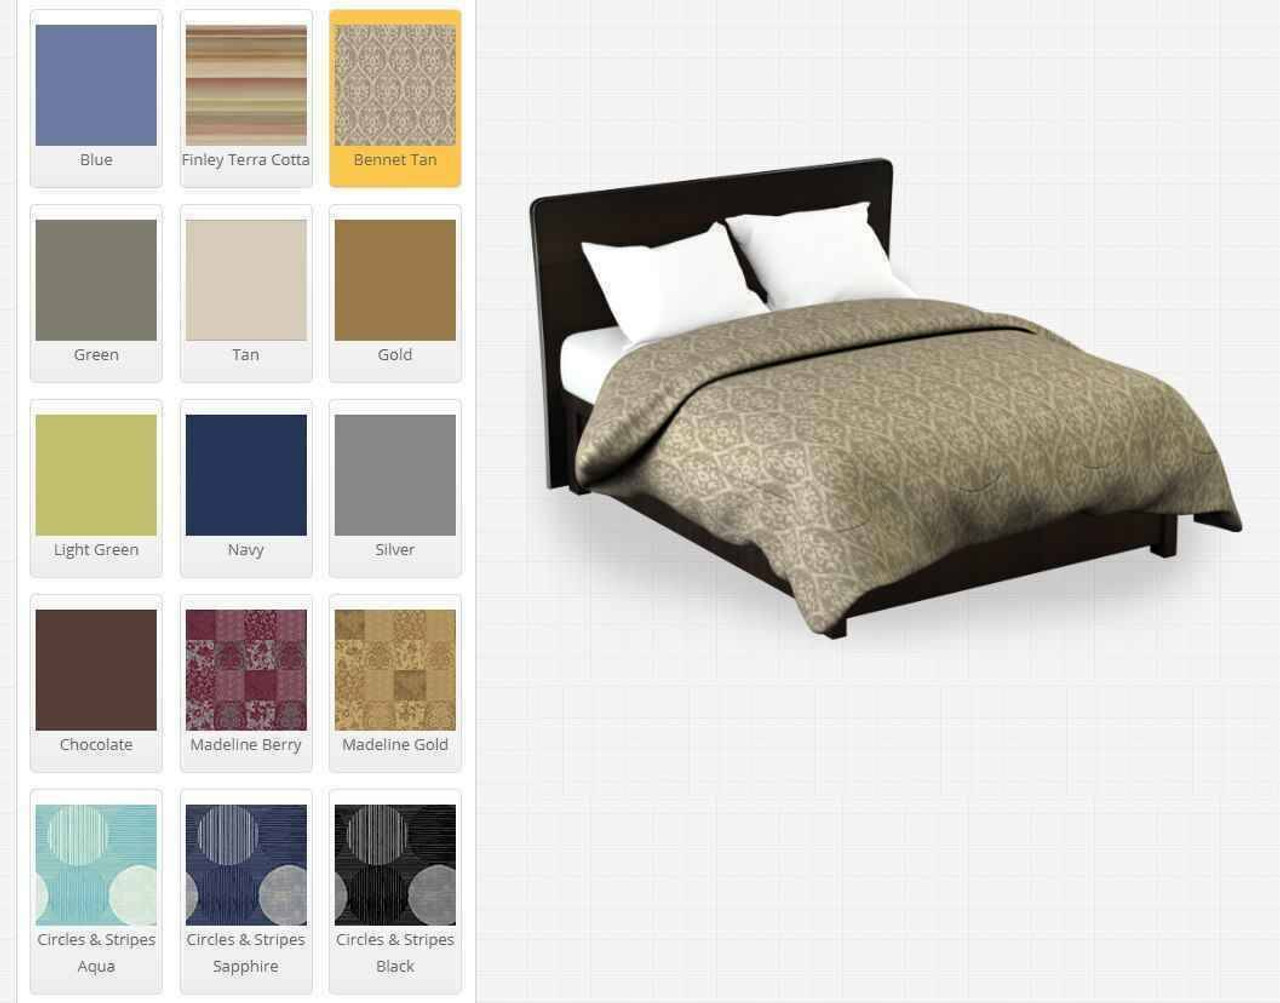 Martex RX Bedding by Westpoint Hospitality Martex RX Bedding or Comforter